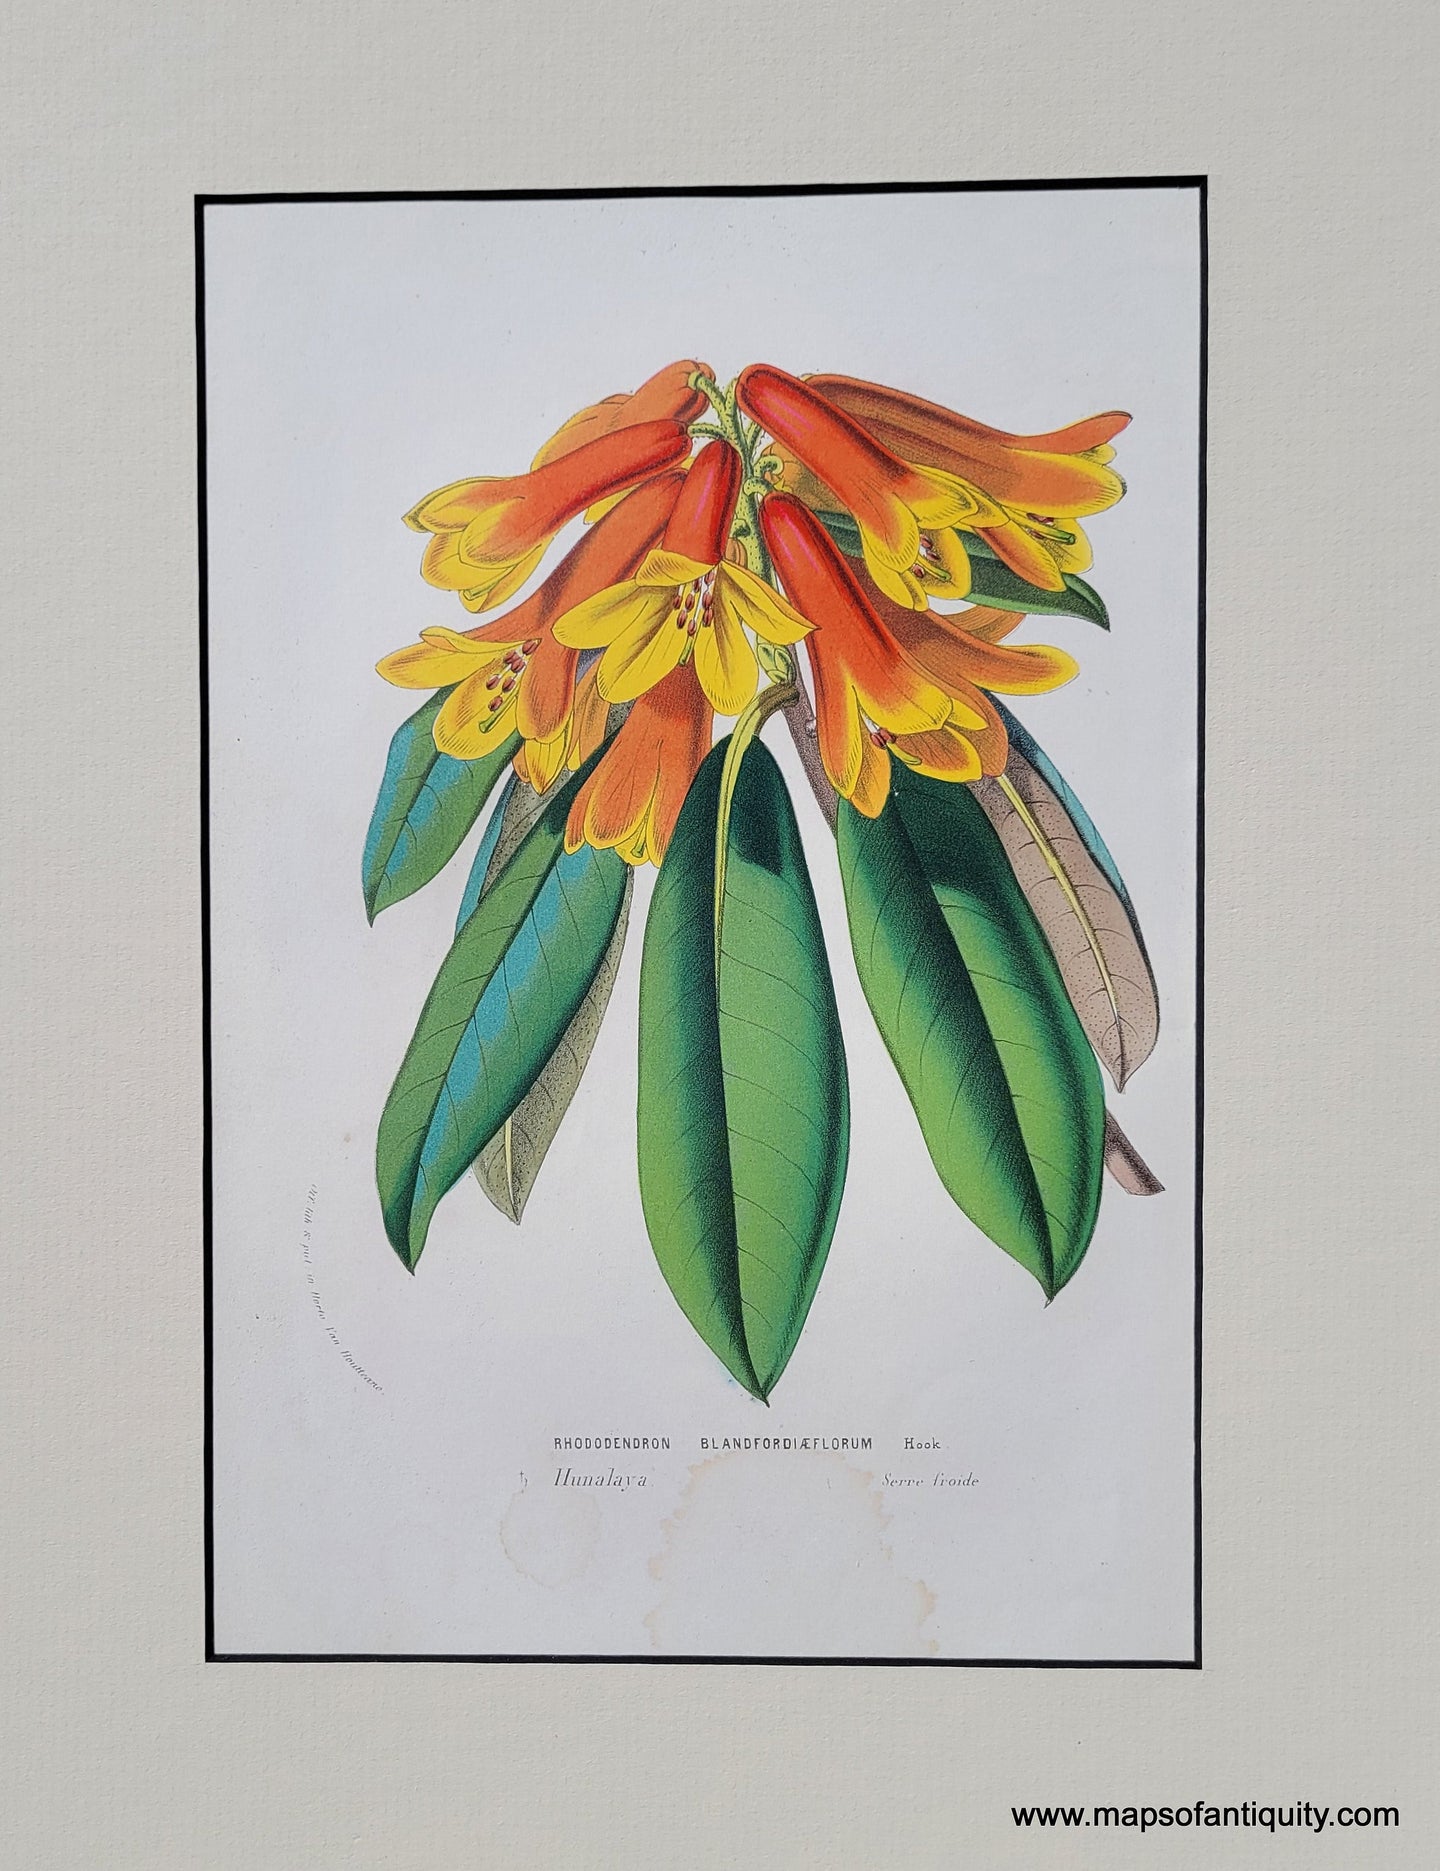 Genuine-Antique-Print-Rhododendron-Blandfordiaeflorum-1850-Van-Houtte-Maps-Of-Antiquity